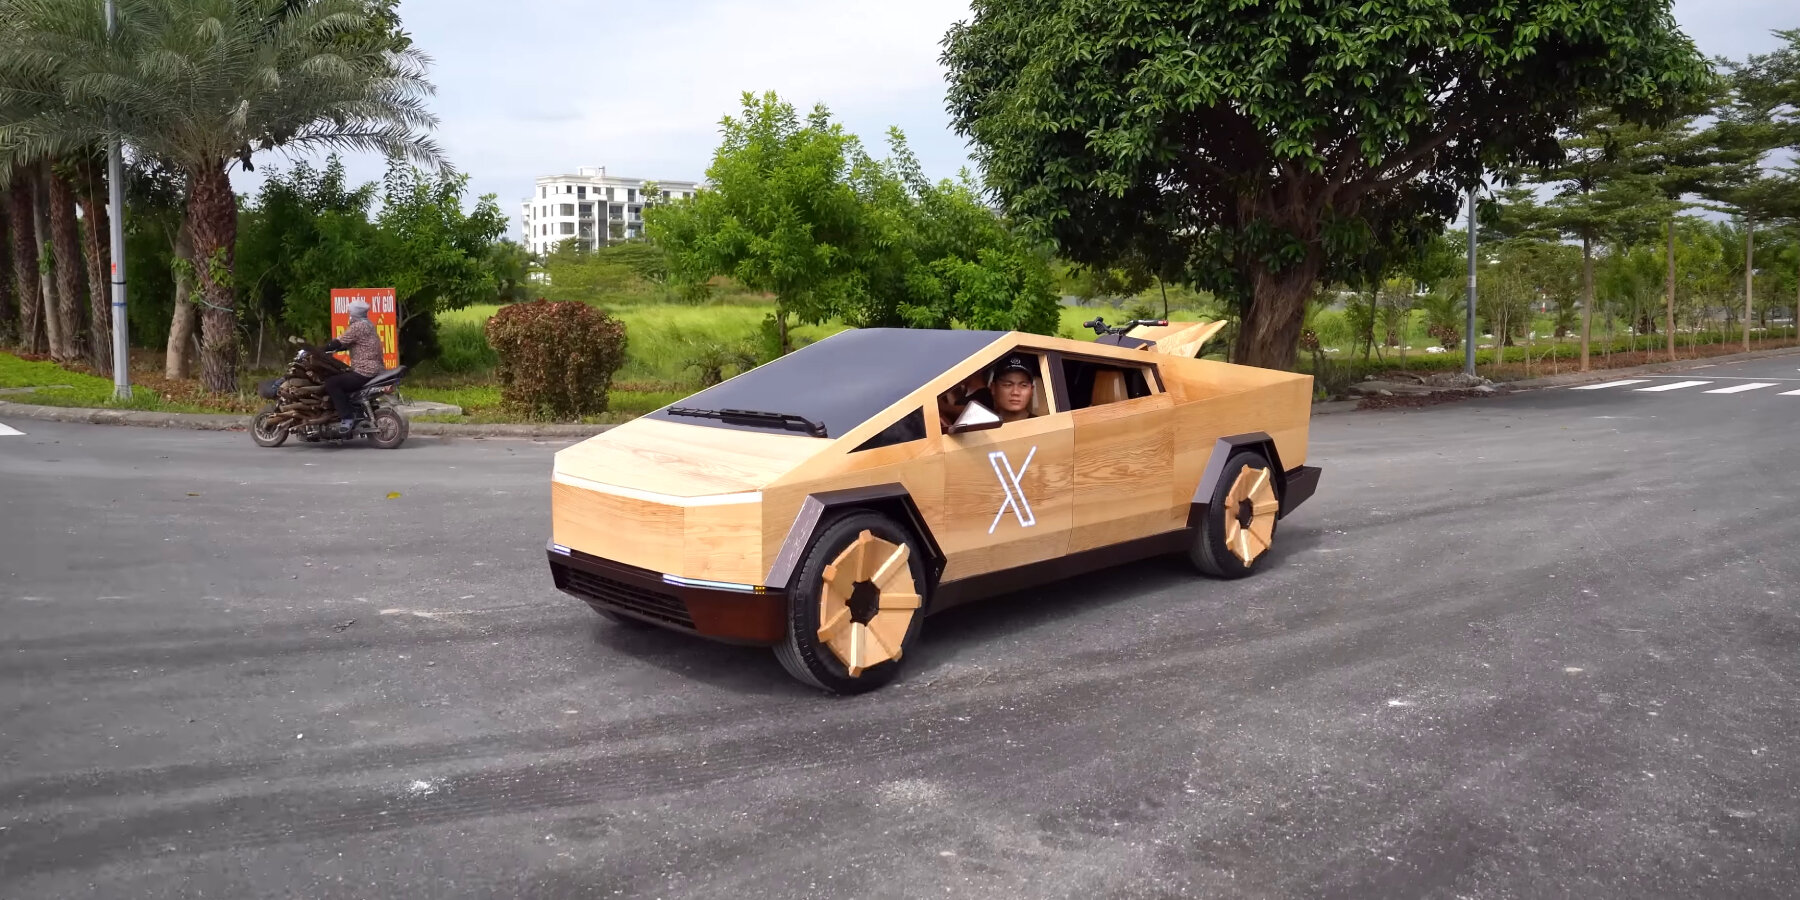 Man Builds Fully Functional Tesla Cybertruck Using Wood, Elon Musk